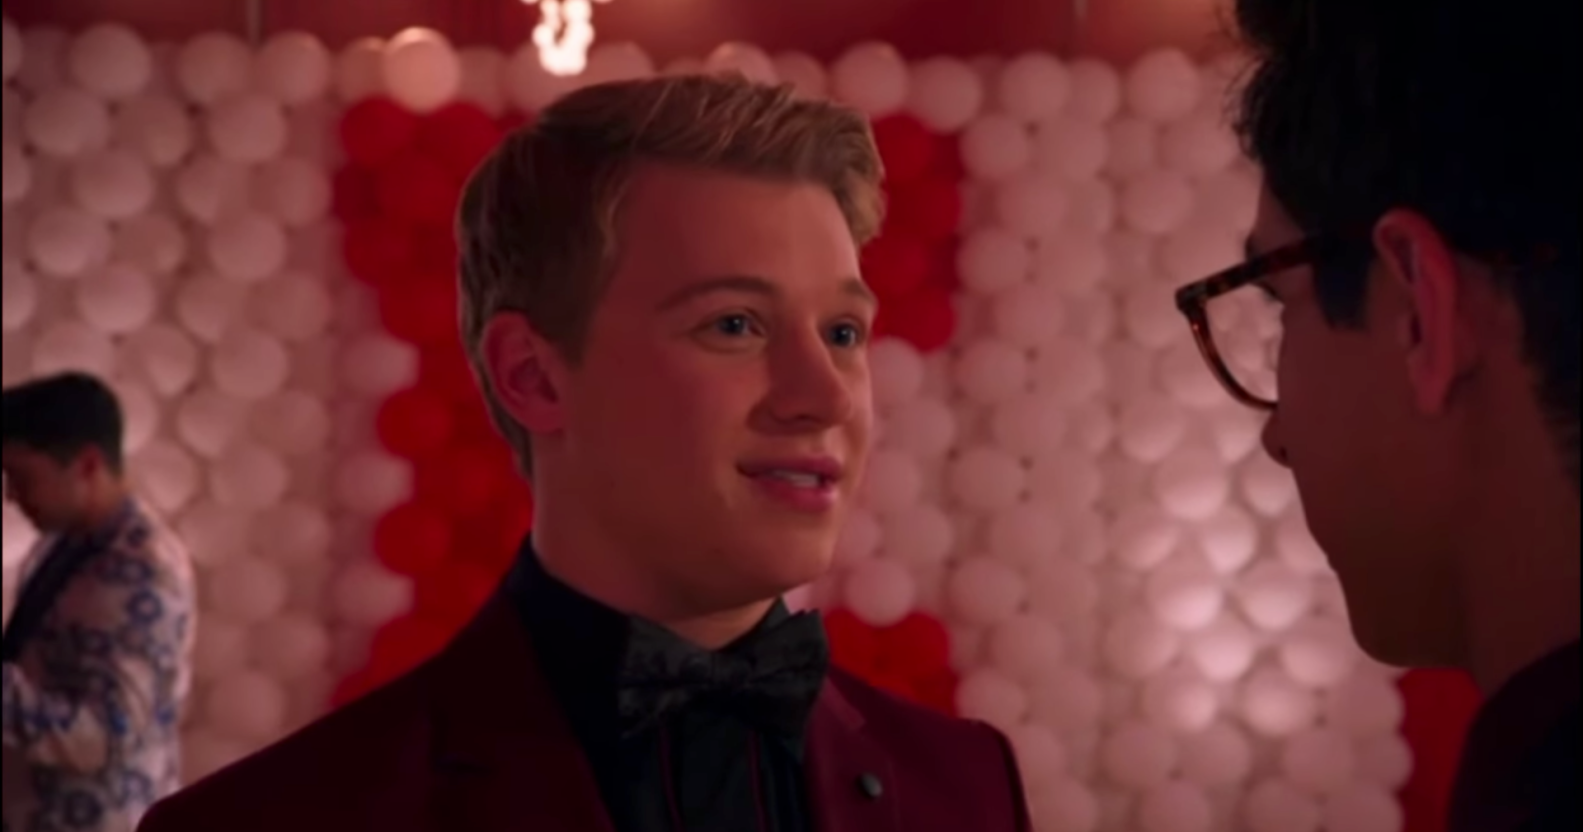 High School Gay Porn - Disney's High School Musical franchise finally has its first gay romance